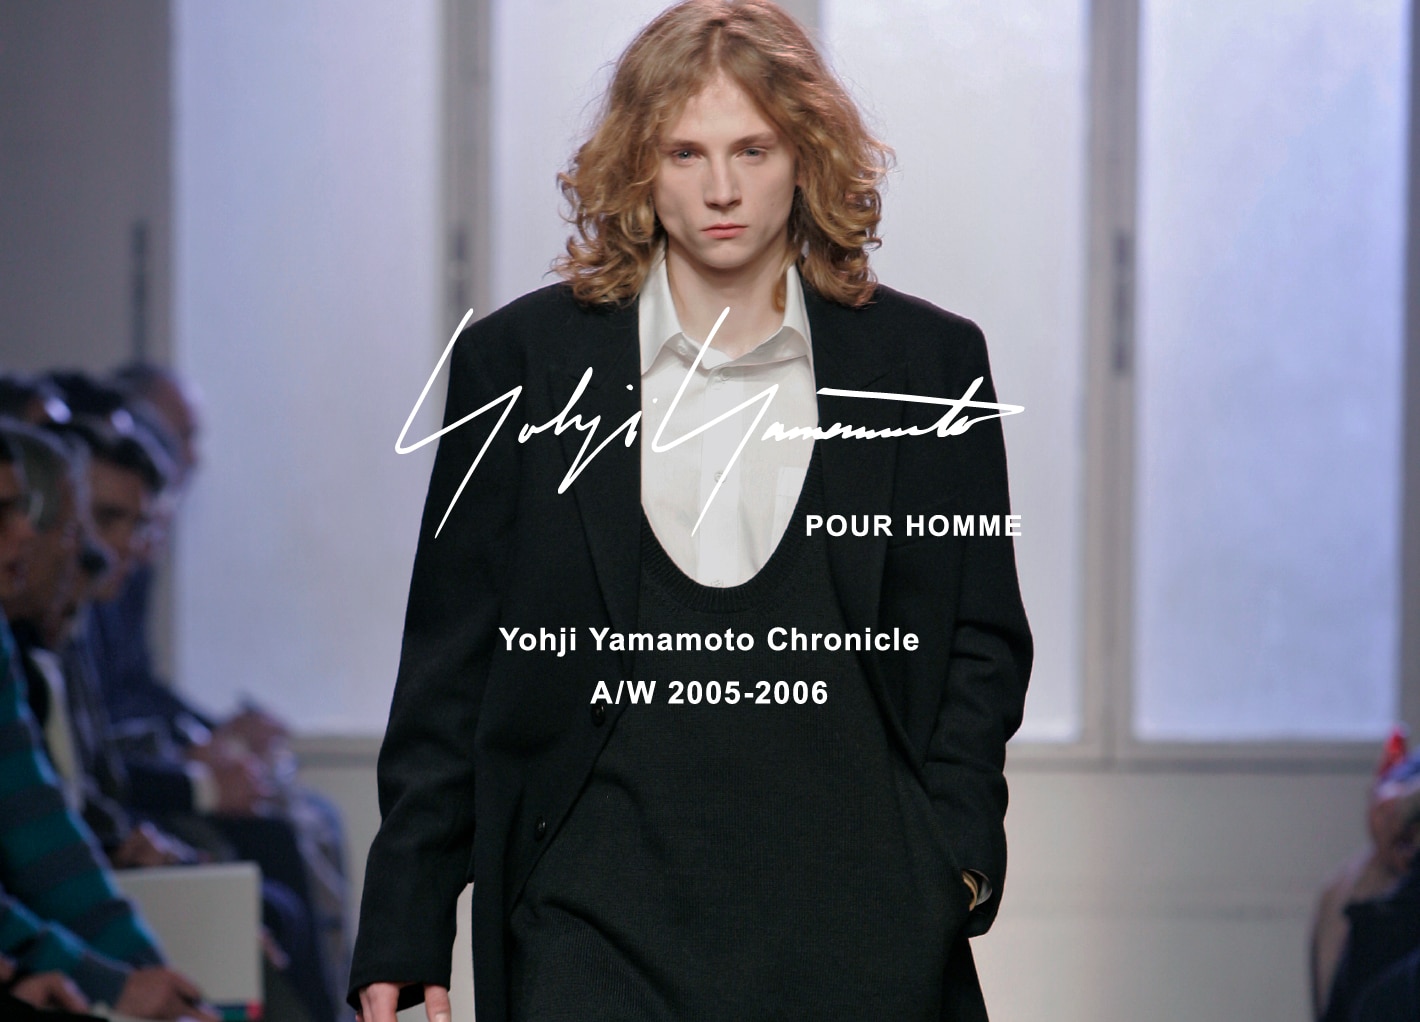 Yohji Yamamoto Chronicle – POUR HOMME AW 2005-2006